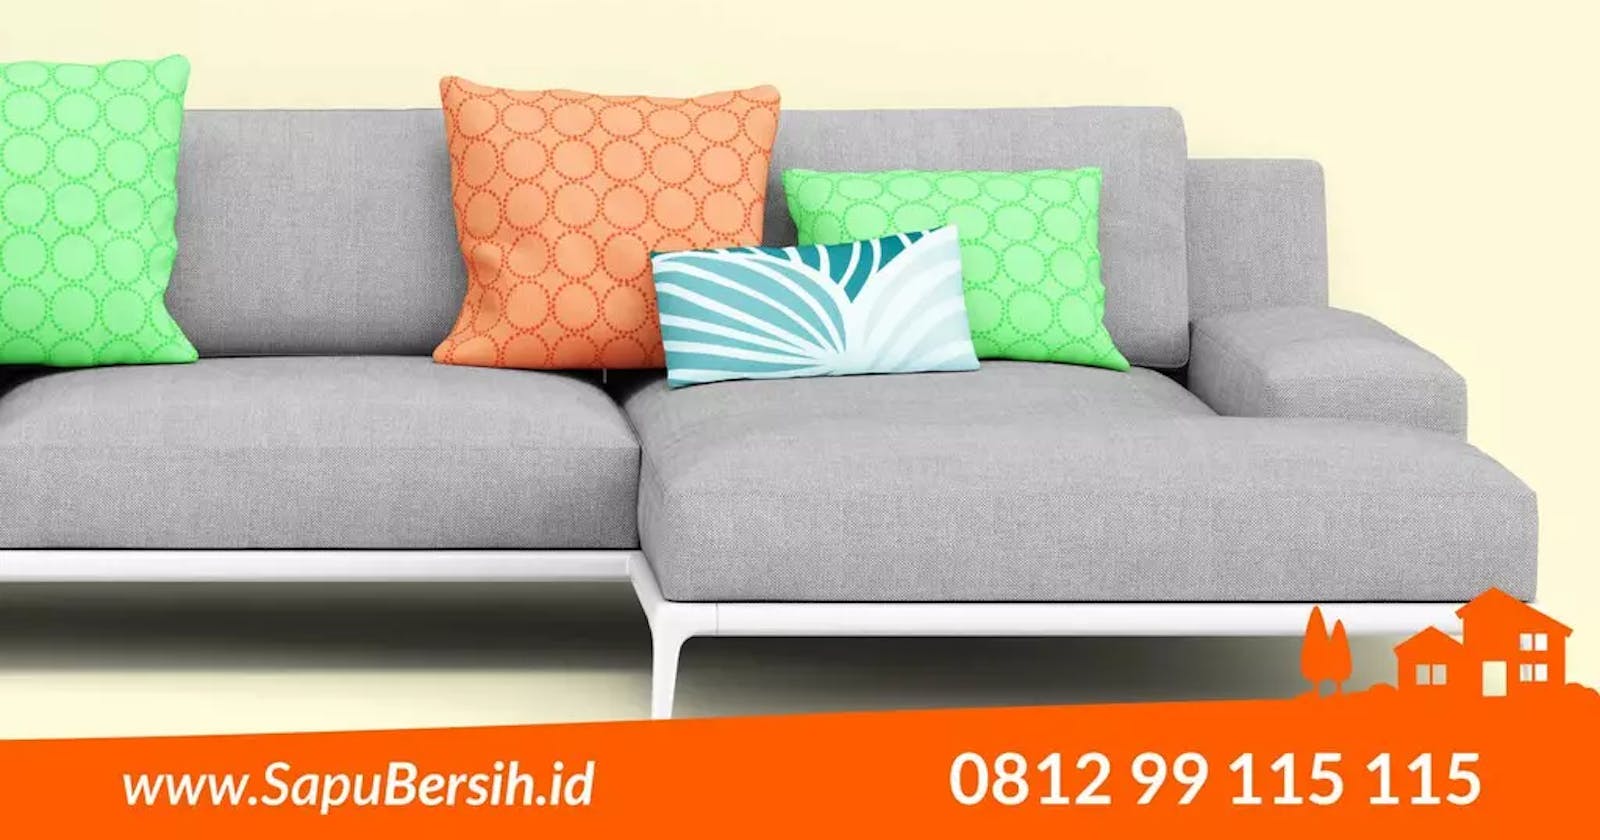 Jasa Mencuci Sofa Di Kota Bandung